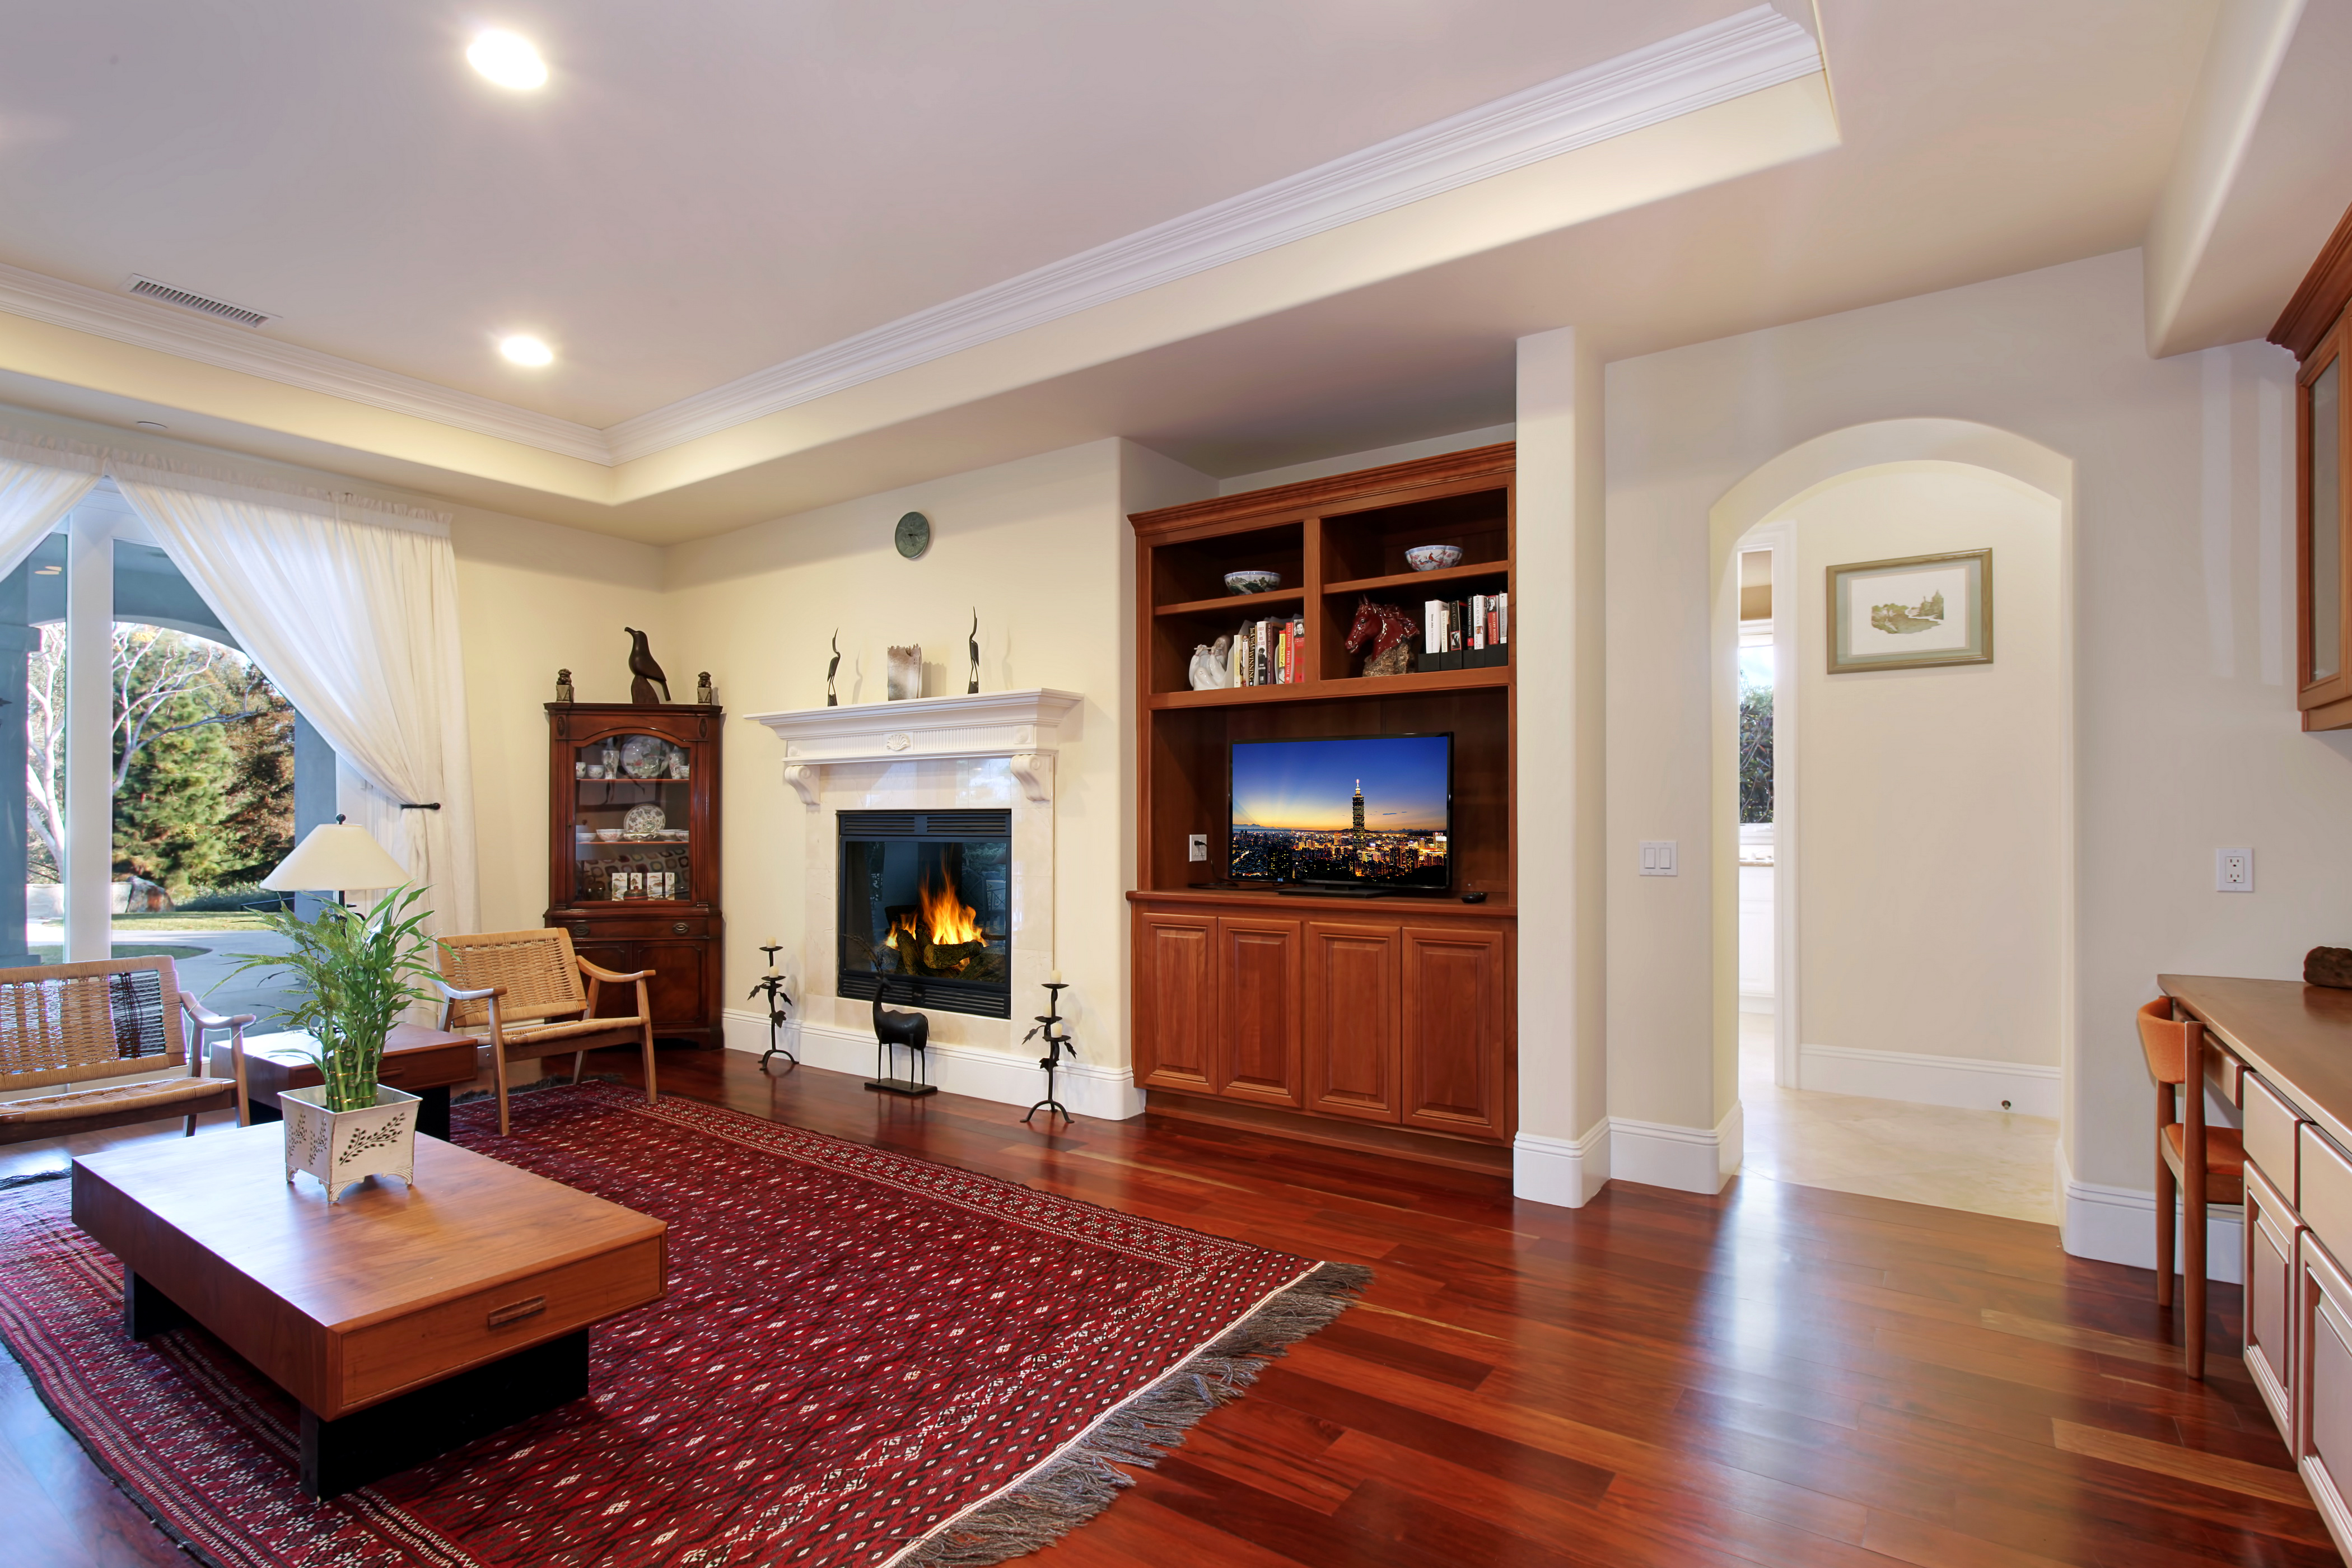 fireplace between 2 rooms of carpet